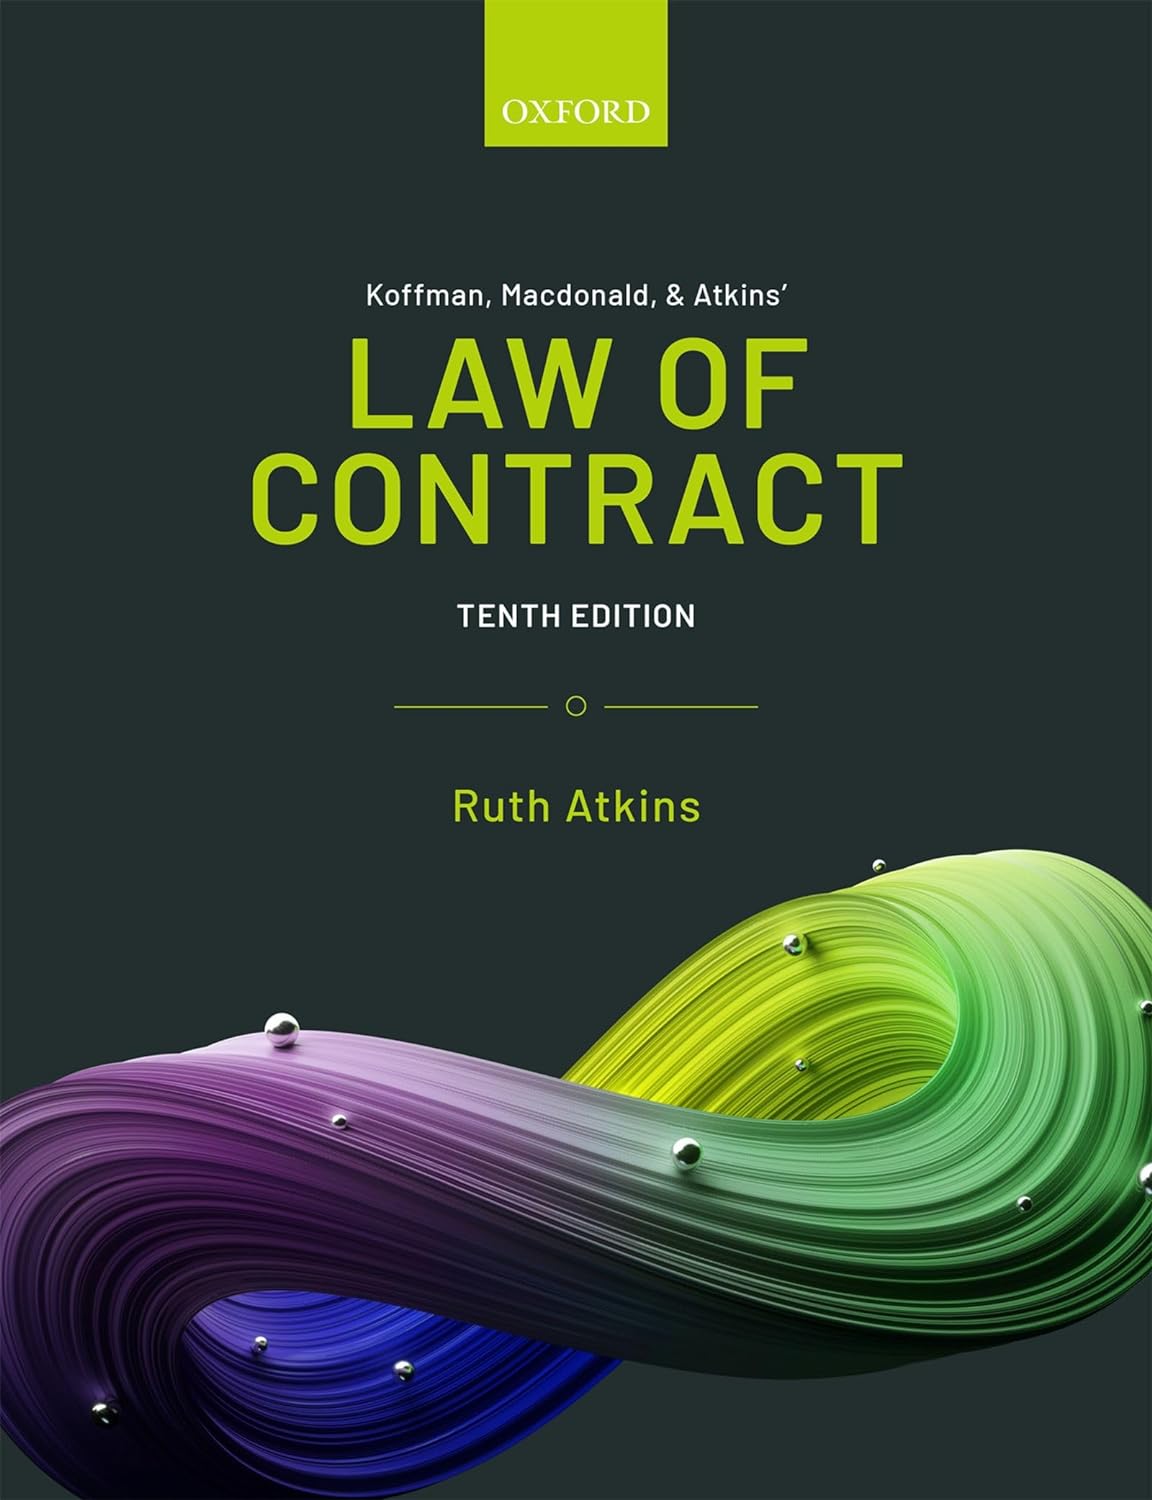 Koffman, Macdonald & Atkins' Contractwet, 10e editie